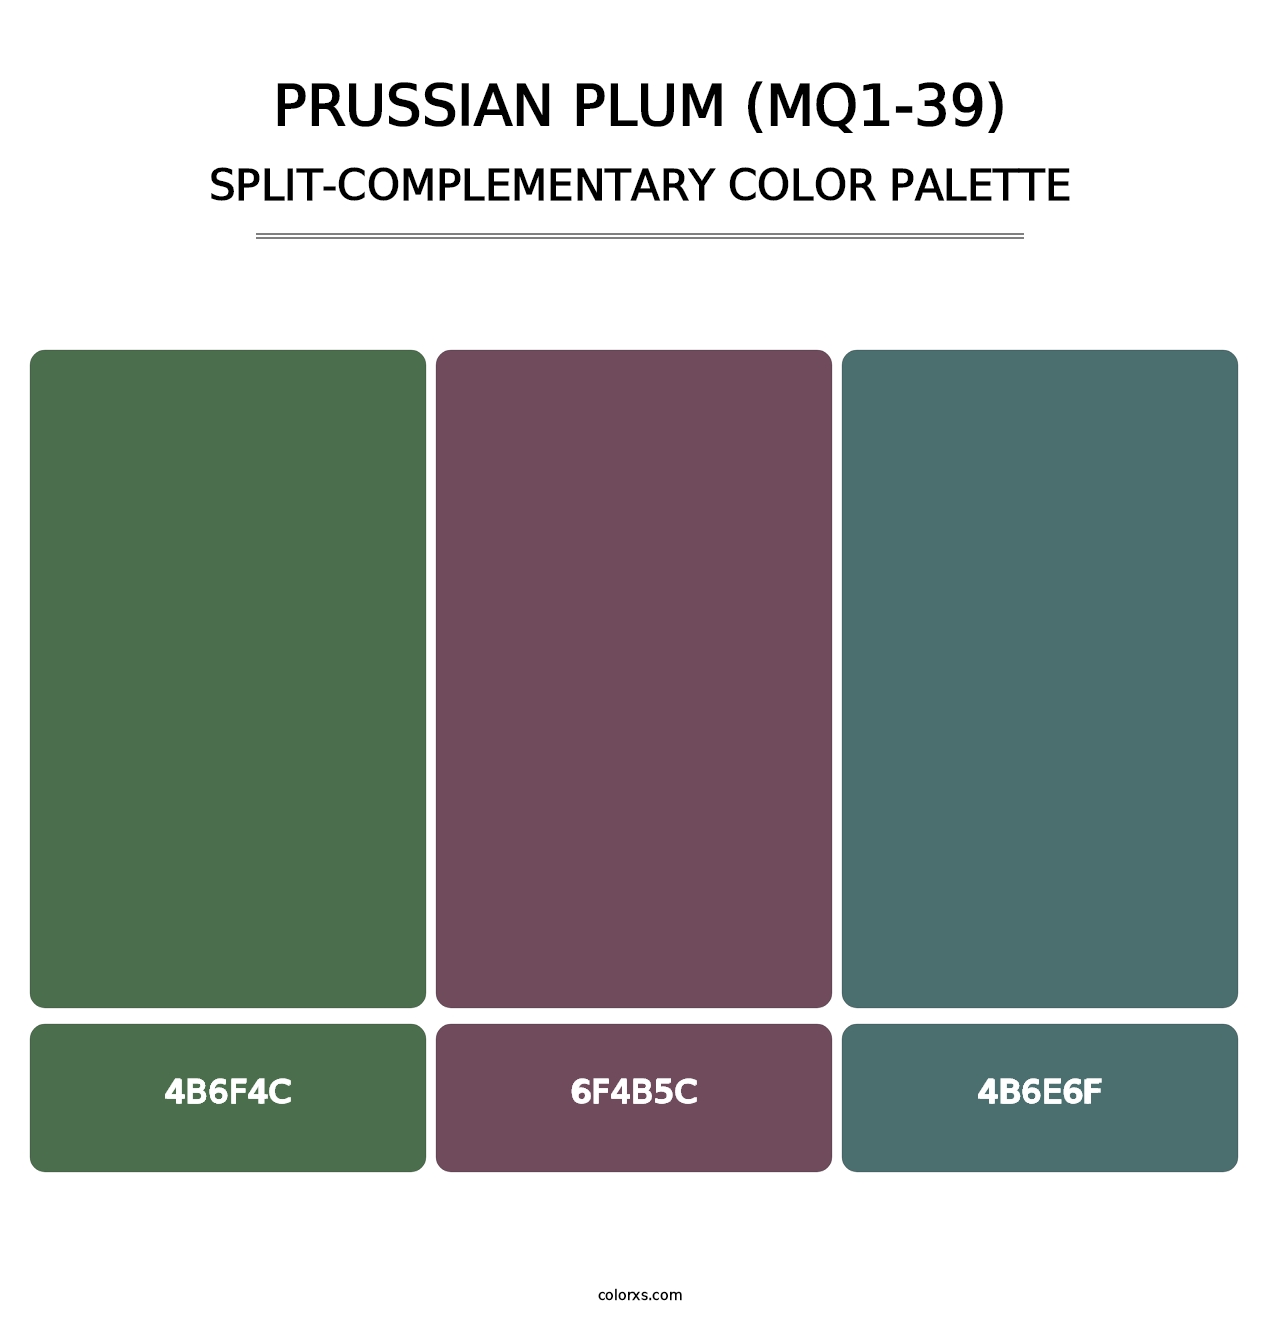 Prussian Plum (MQ1-39) - Split-Complementary Color Palette